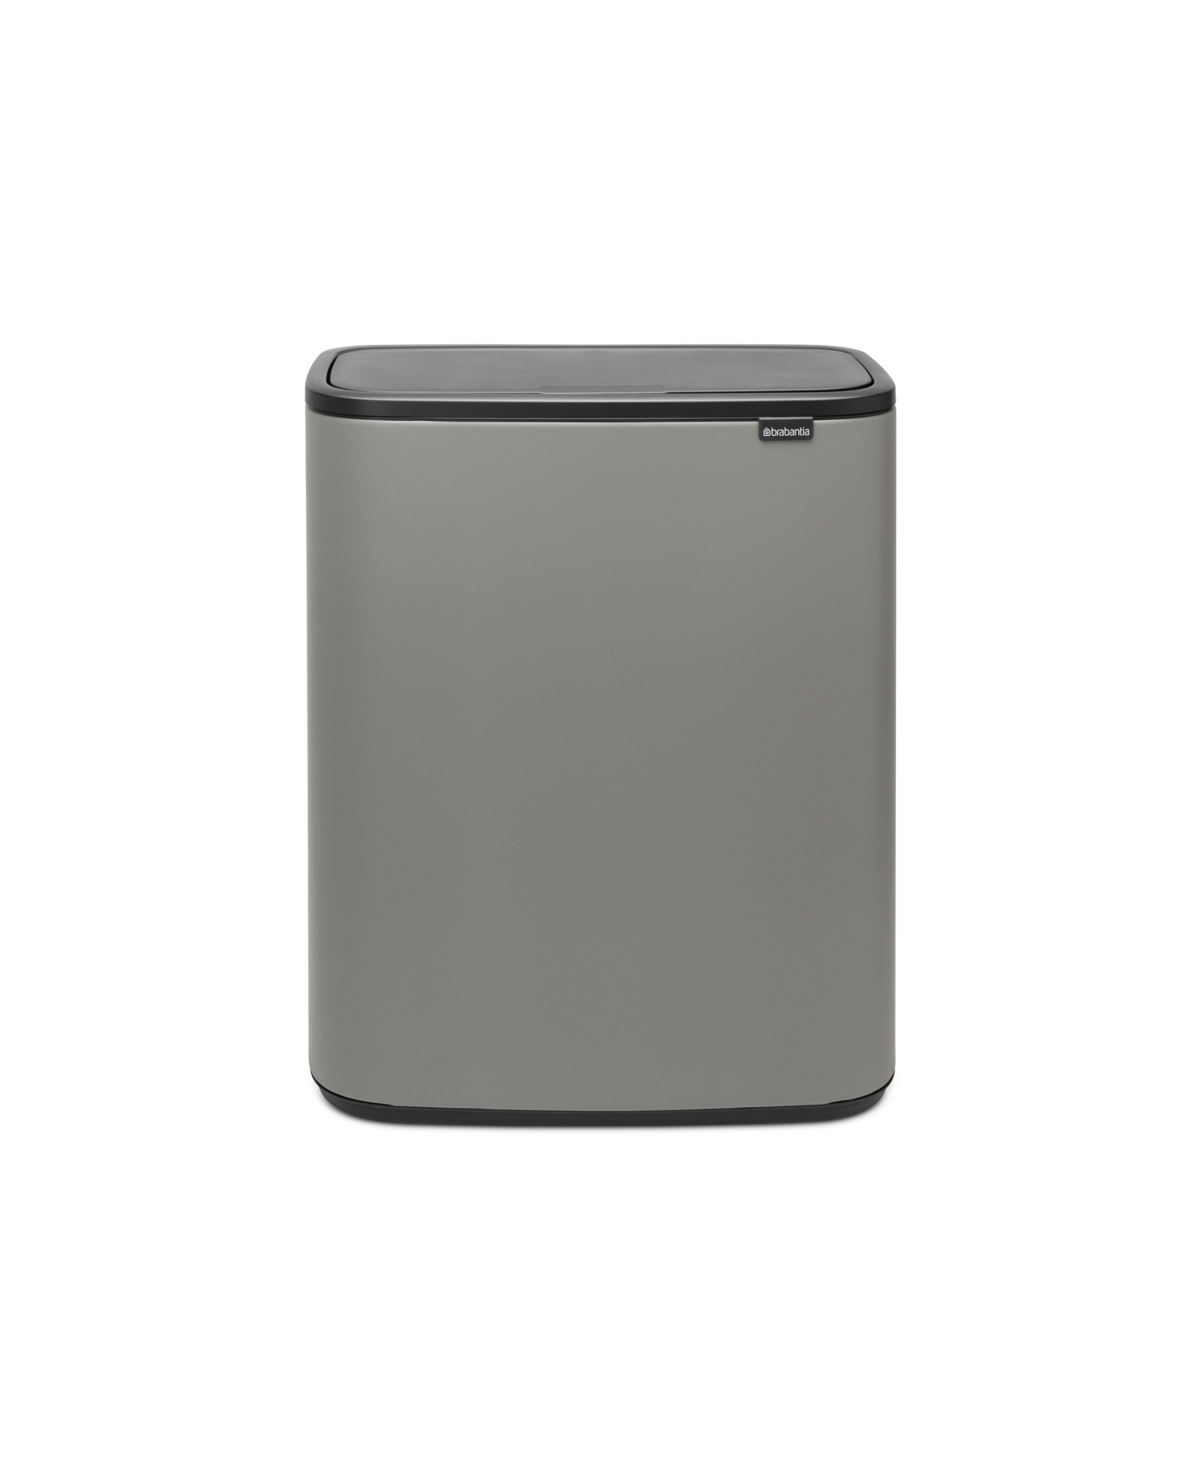 Bo Touch Top Trash Can, 16 Gallon, 60 Liter - Mineral Concrete Gray